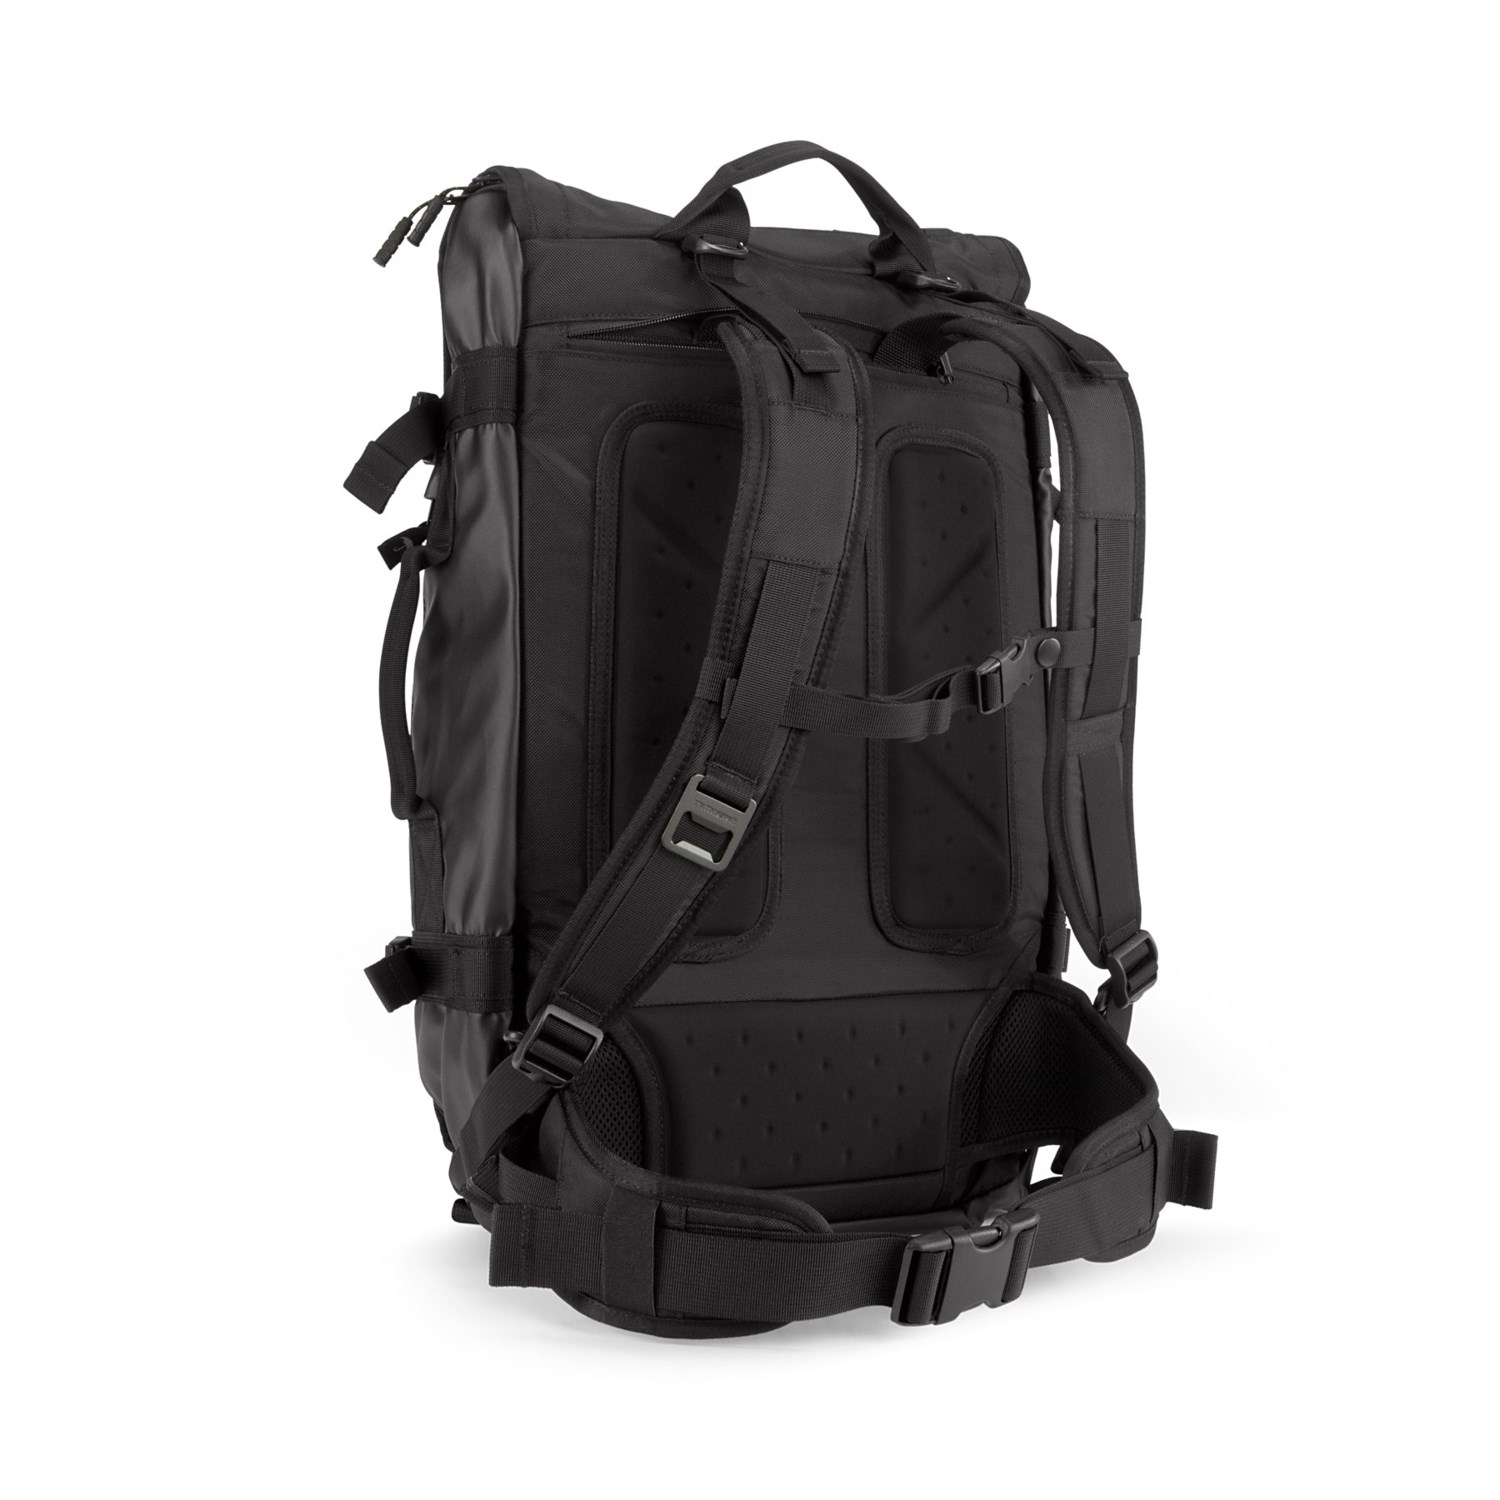 Timbuk2 Aviator Travel Backpack - Medium - Save 57%